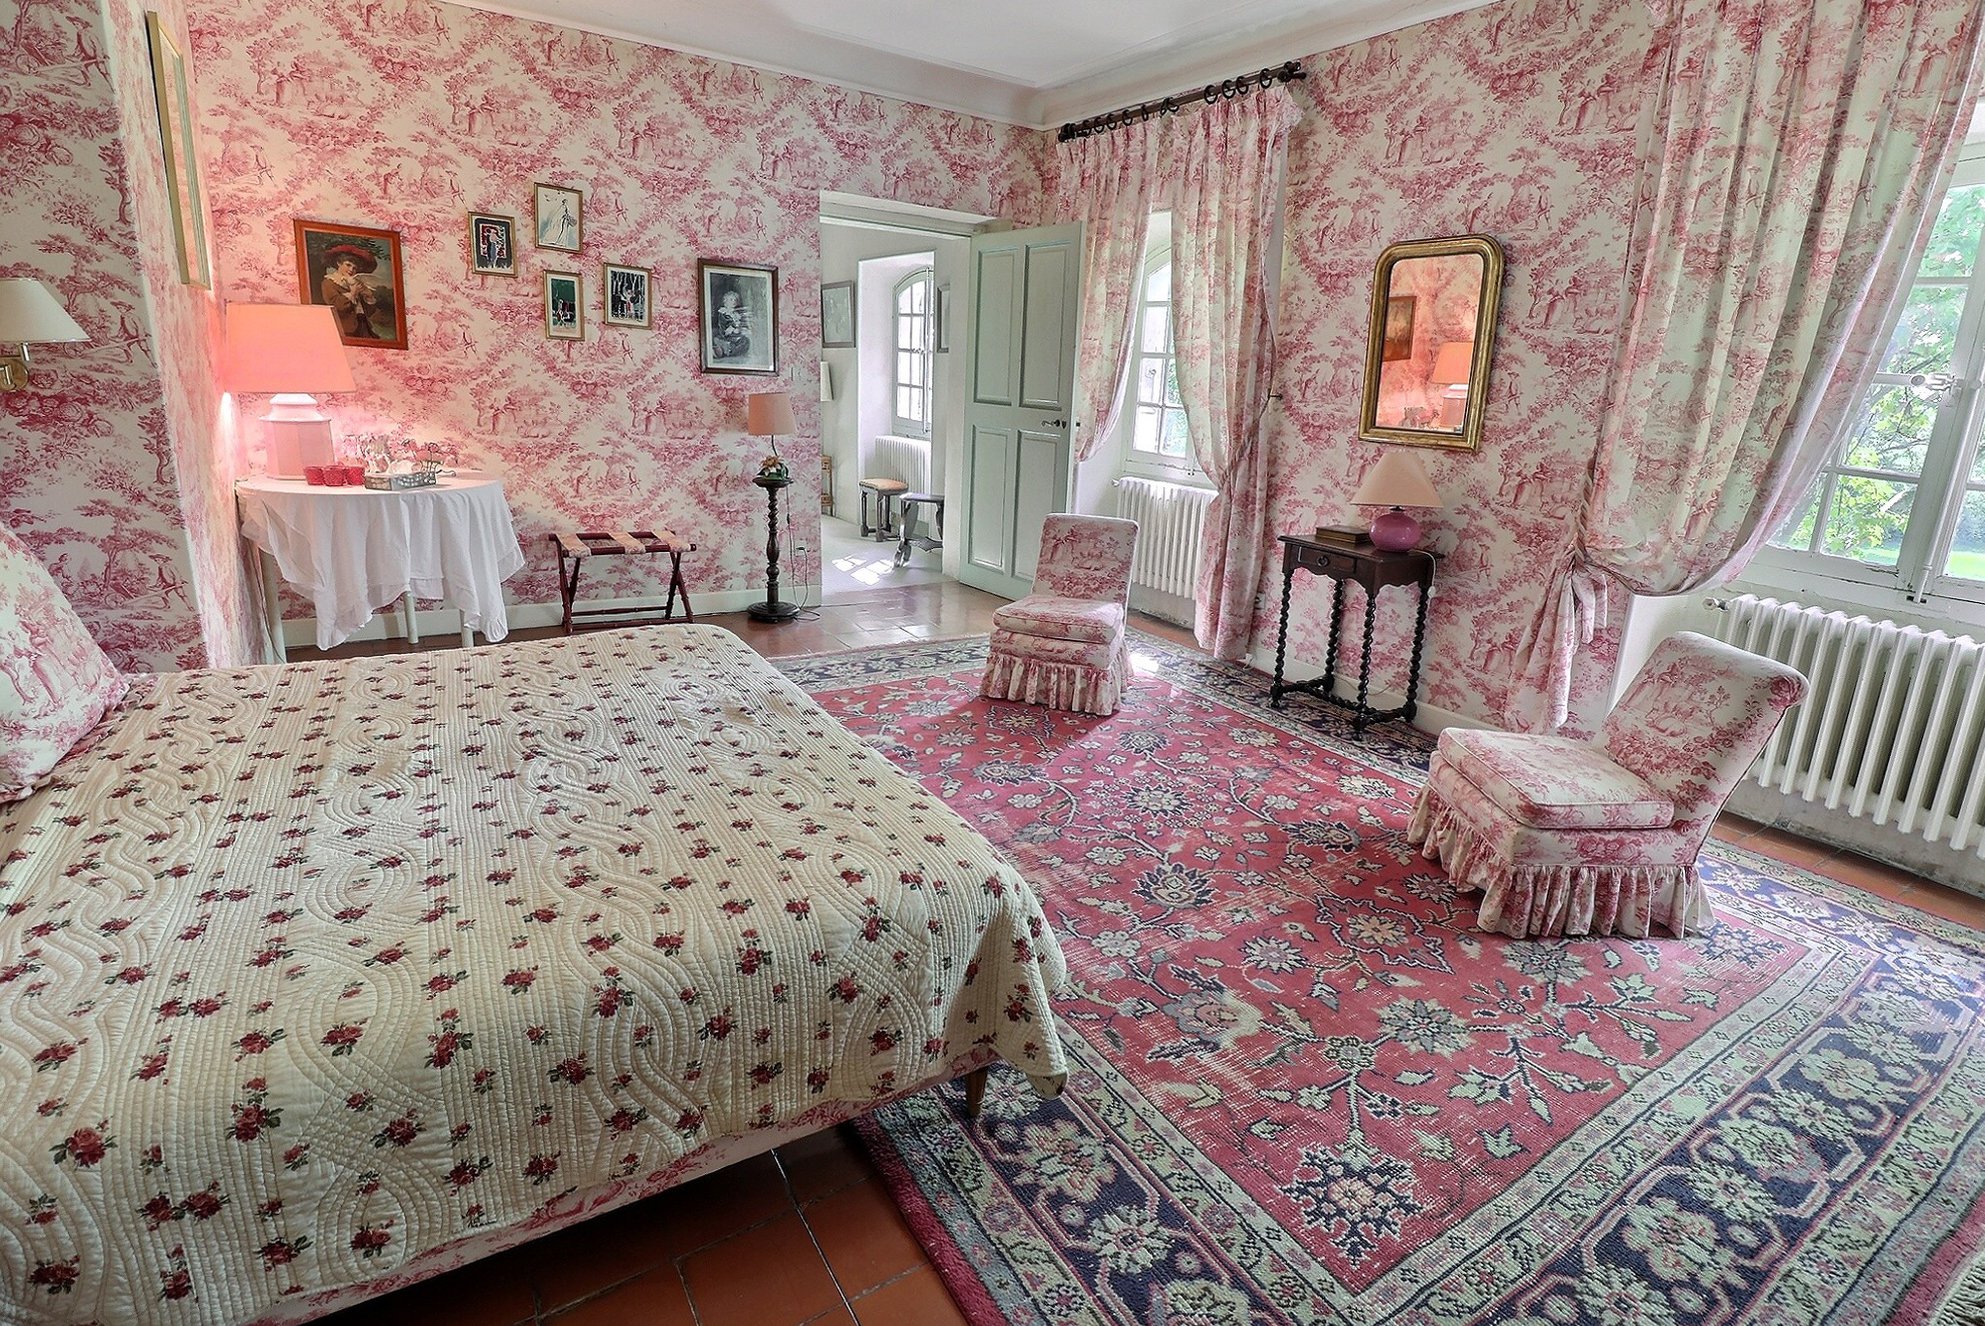 Francis York Emile Garcin Enchanting 18th Century Manor House Bastide For Sale in Provence, France 29.jpg